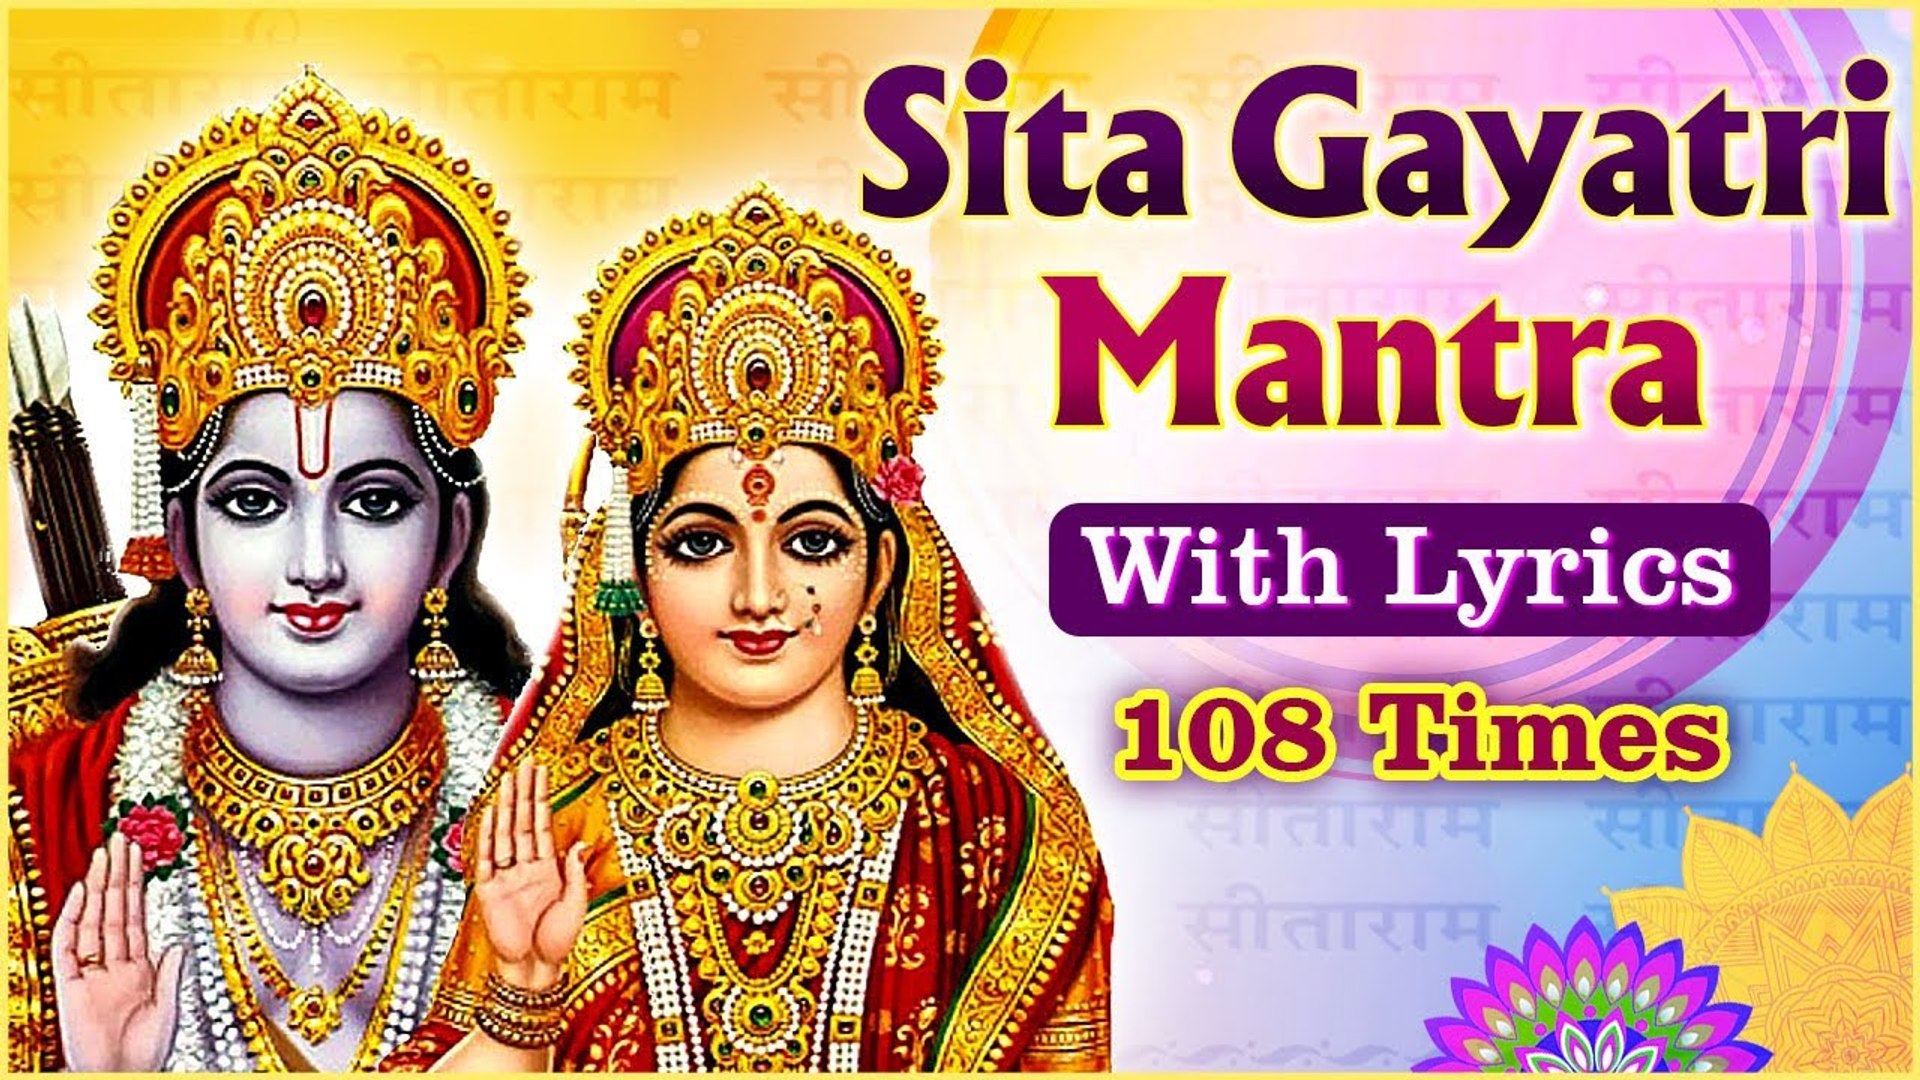 माता सीता गायत्री मंत्र | Sita Gayatri Mantra With Lyrics 108 Times |Sita  Navmi 2021 Special Mantra - video Dailymotion